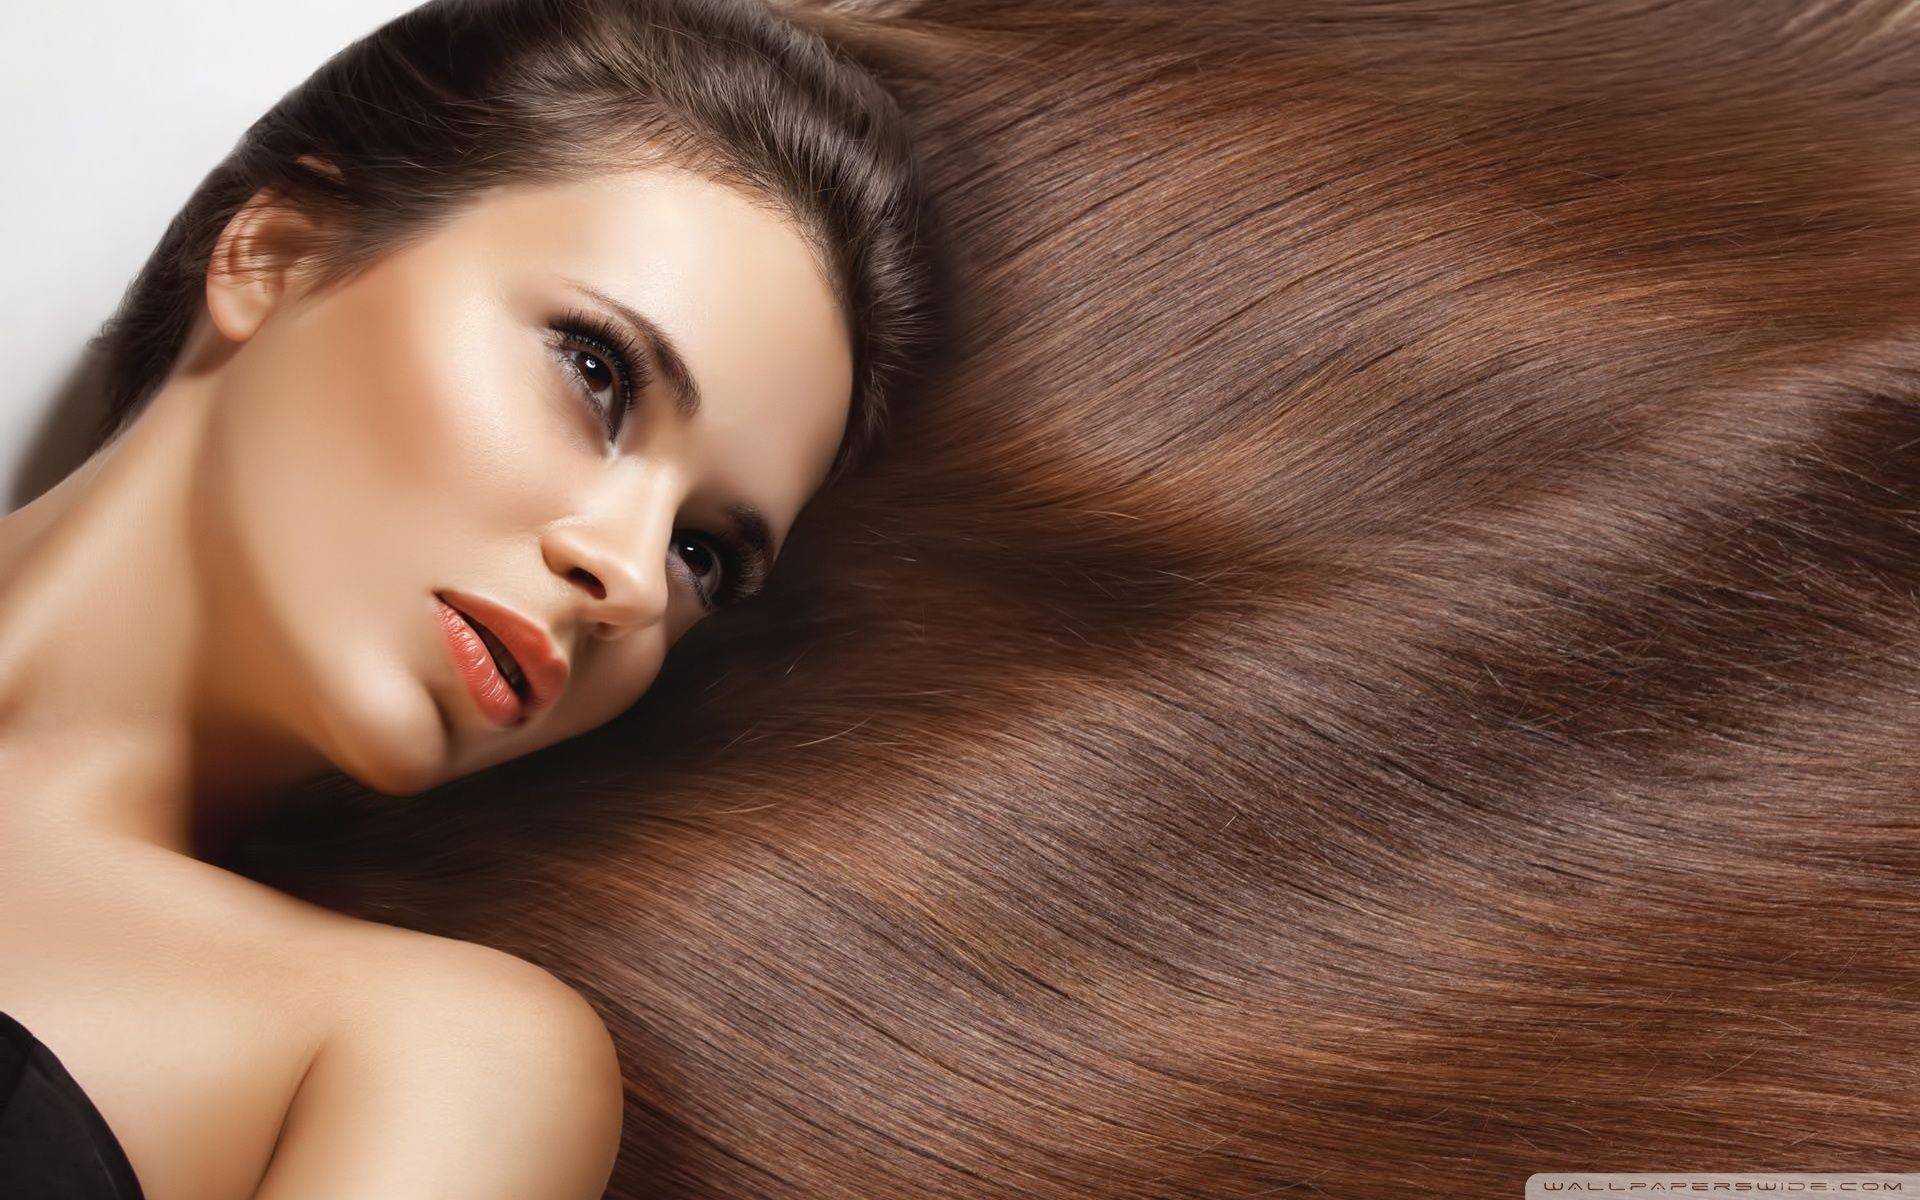 How To Do Hair Spa At Home  Hair Spa Service  Hair Steaming